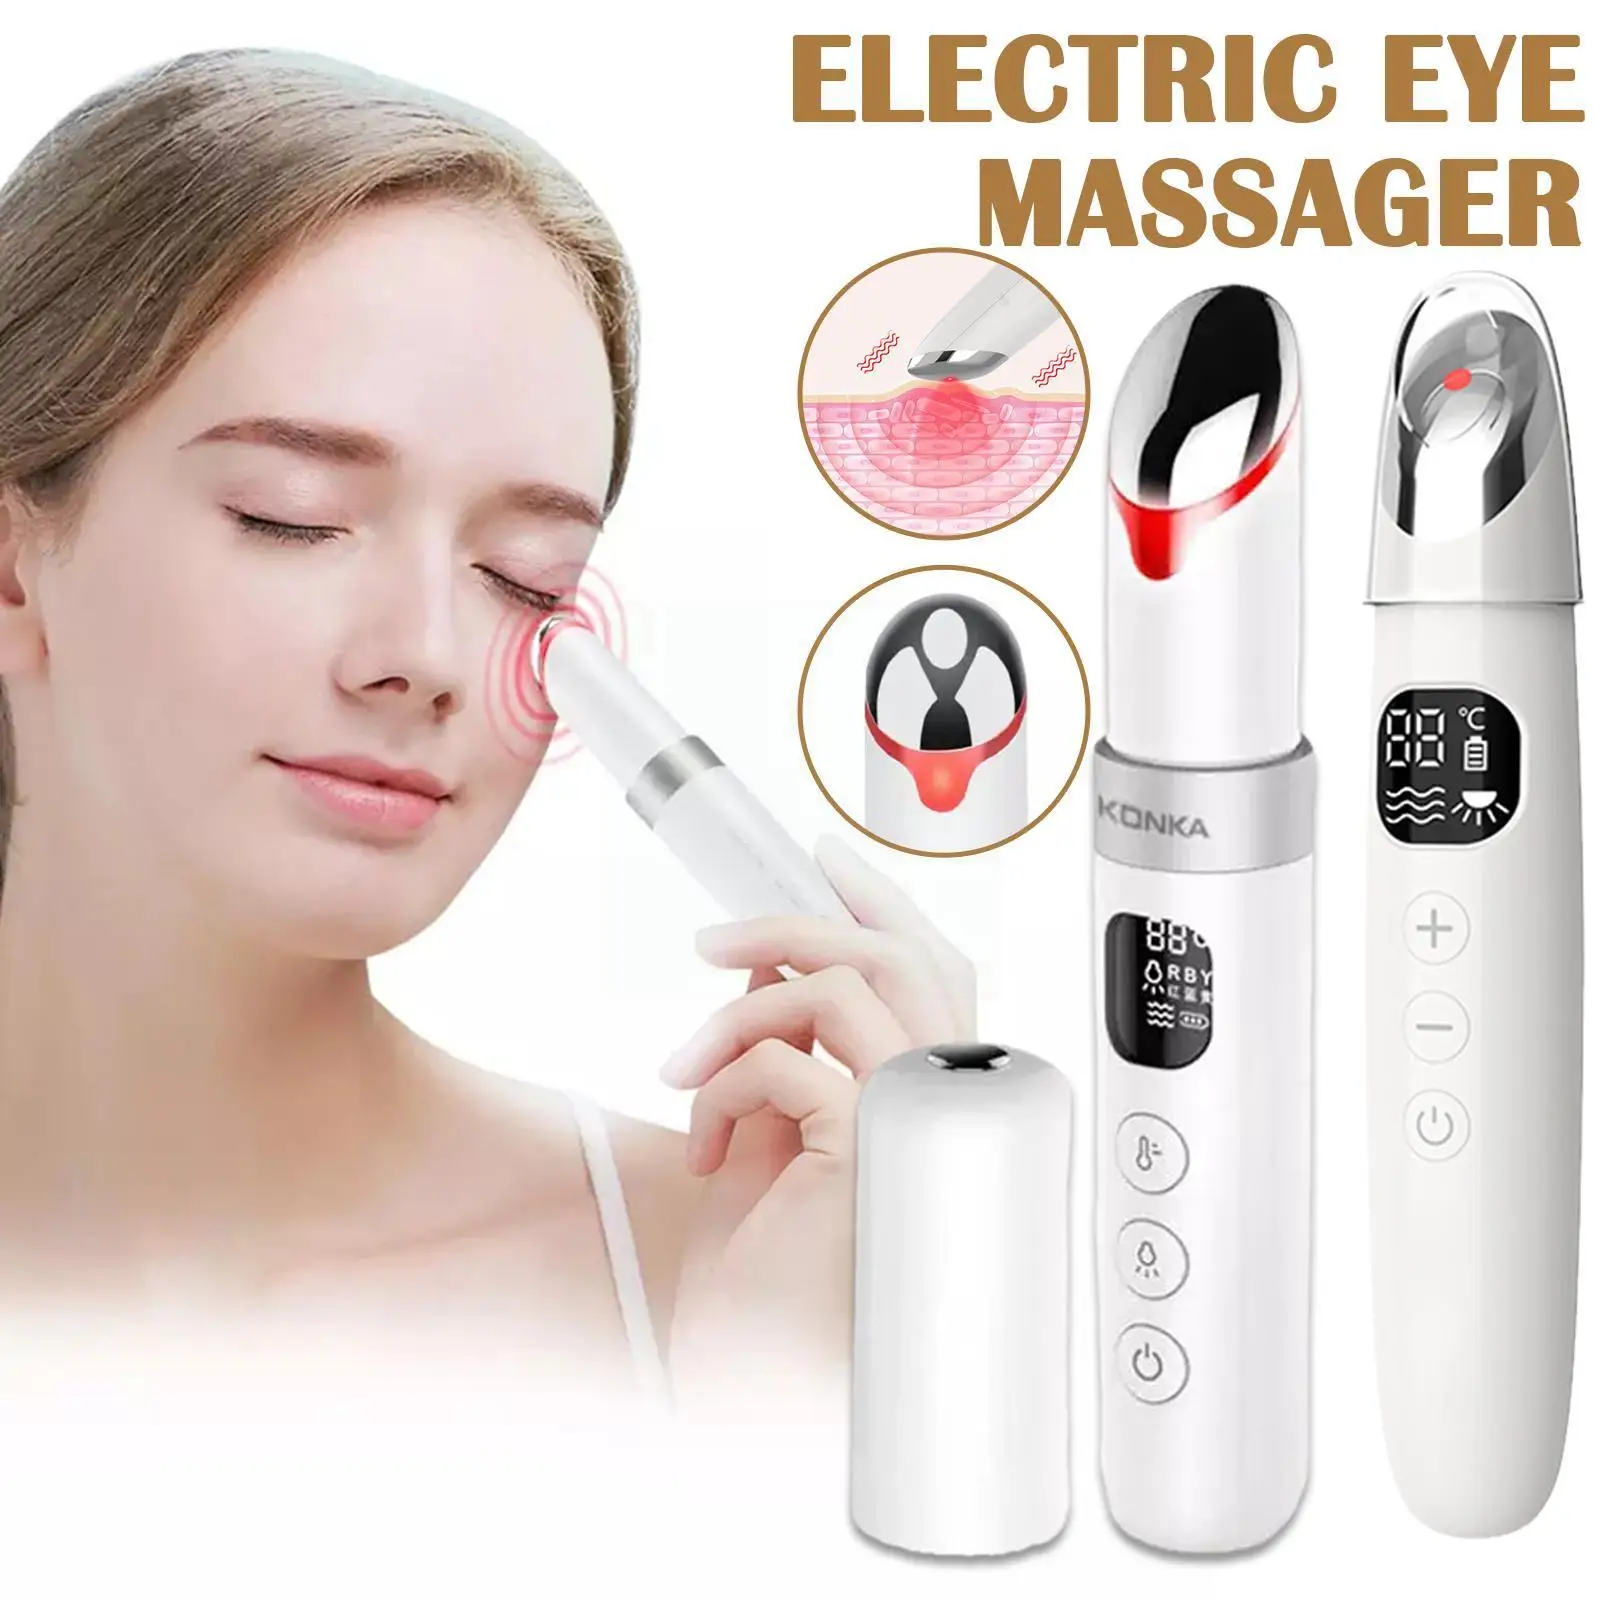 

Electric Eye Massager Eye Skin Lift Anti Age Wrinkle Skin Tool Hot Massage Face Beauty Anti Wrinkle Relax Care Vibration Ma H6A3